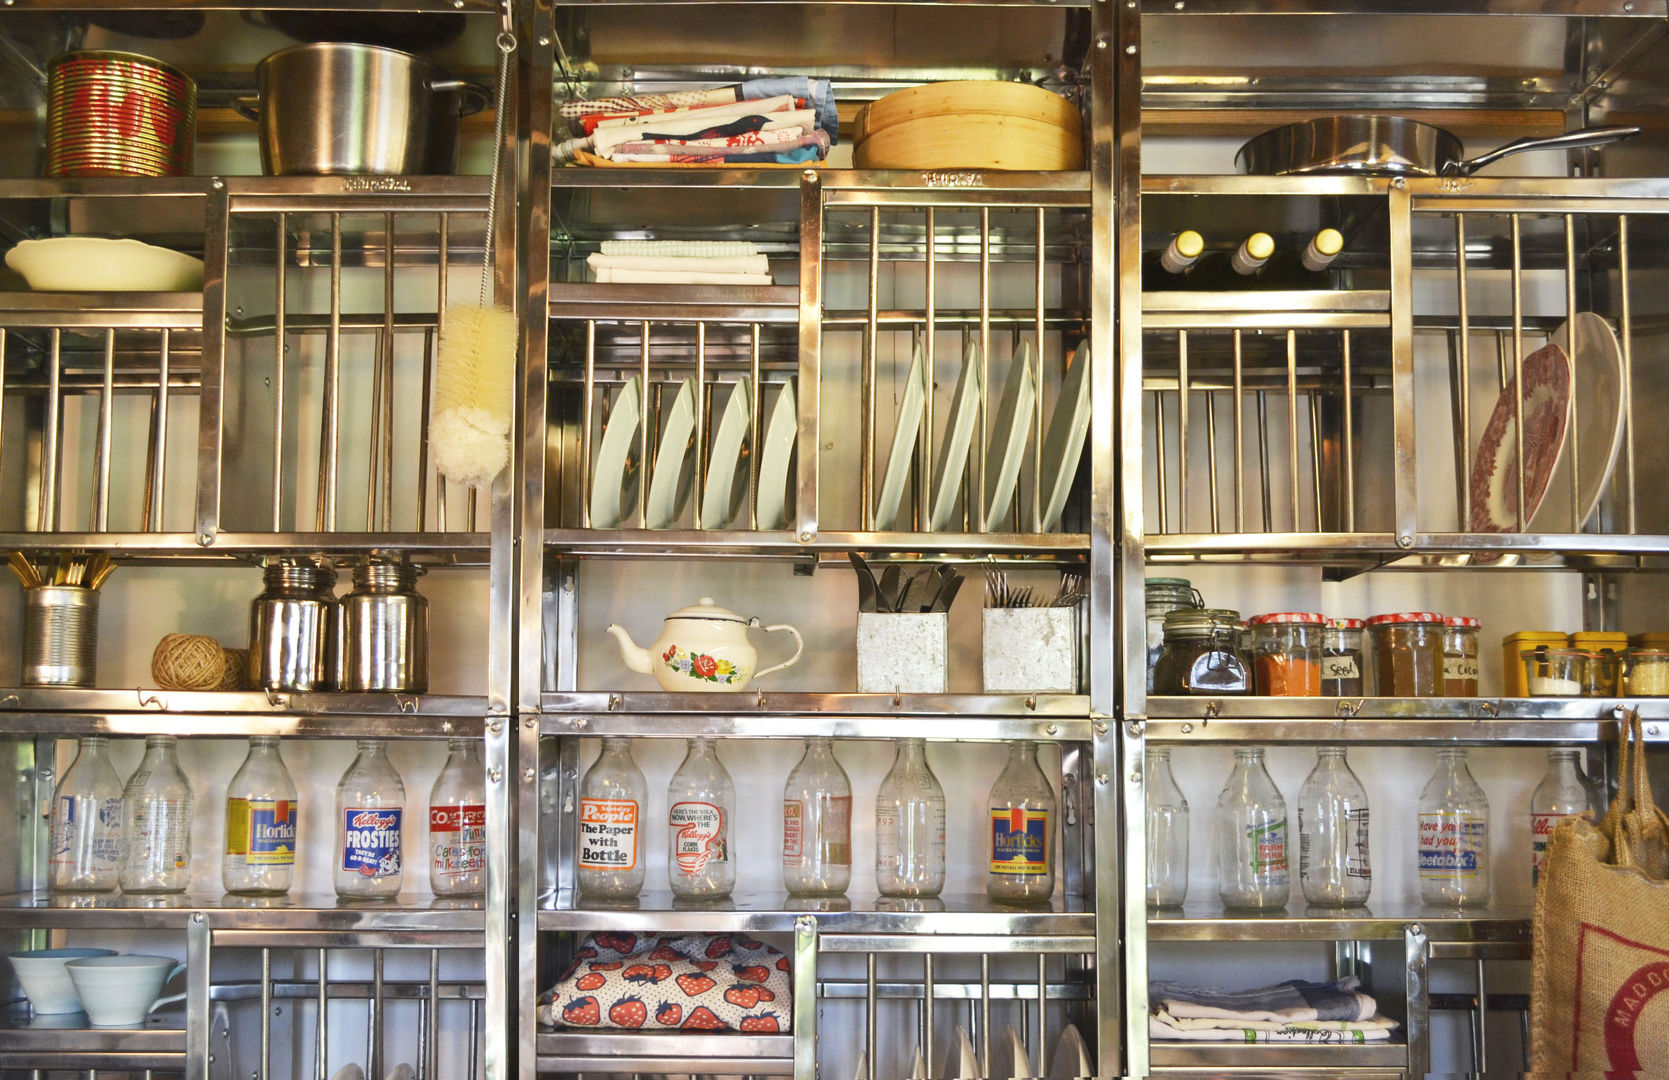 Stainless steel plate racks, The Plate Rack The Plate Rack ห้องครัว ตู้เก็บของและชั้นวางของ